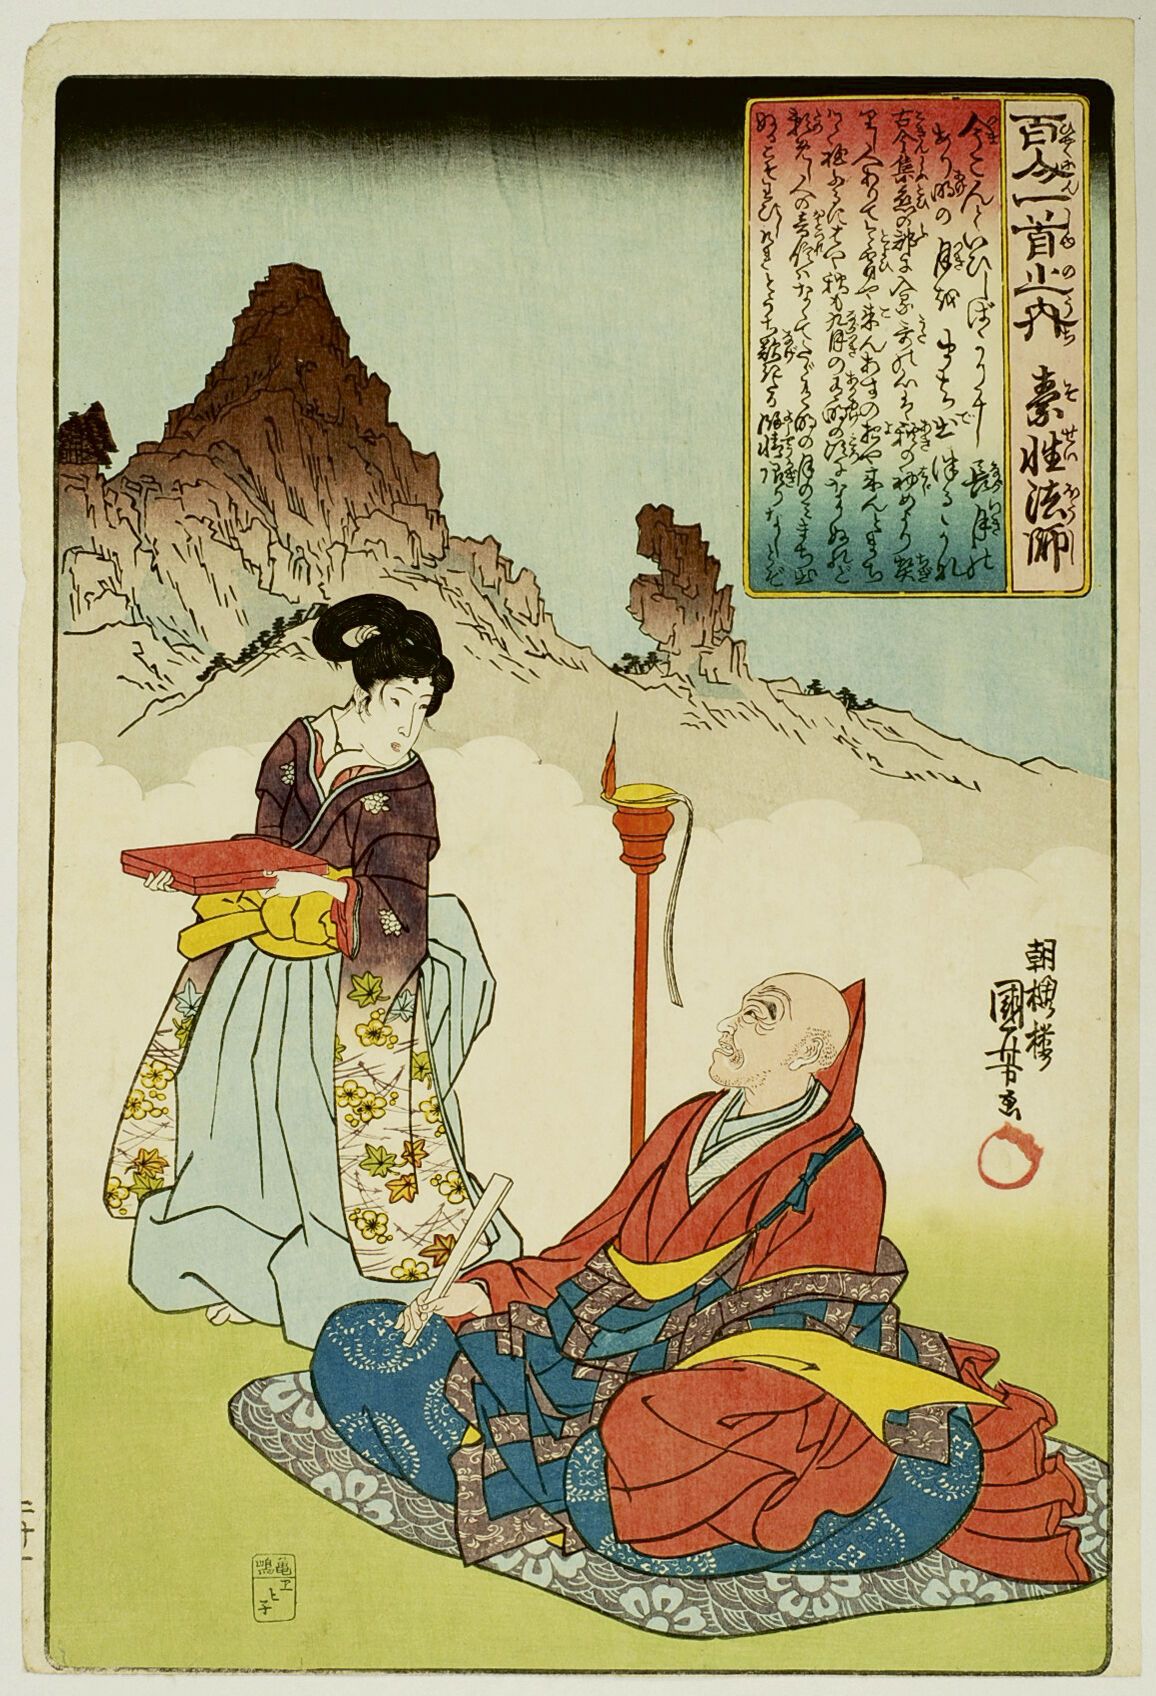 Null 宇都宫邦彦 (1797-1861)
百人一首》系列中的 "大板"（Oban tate-e），板块为 "Sosei-hôshi"（山前坐着的僧人和他的侍&hellip;